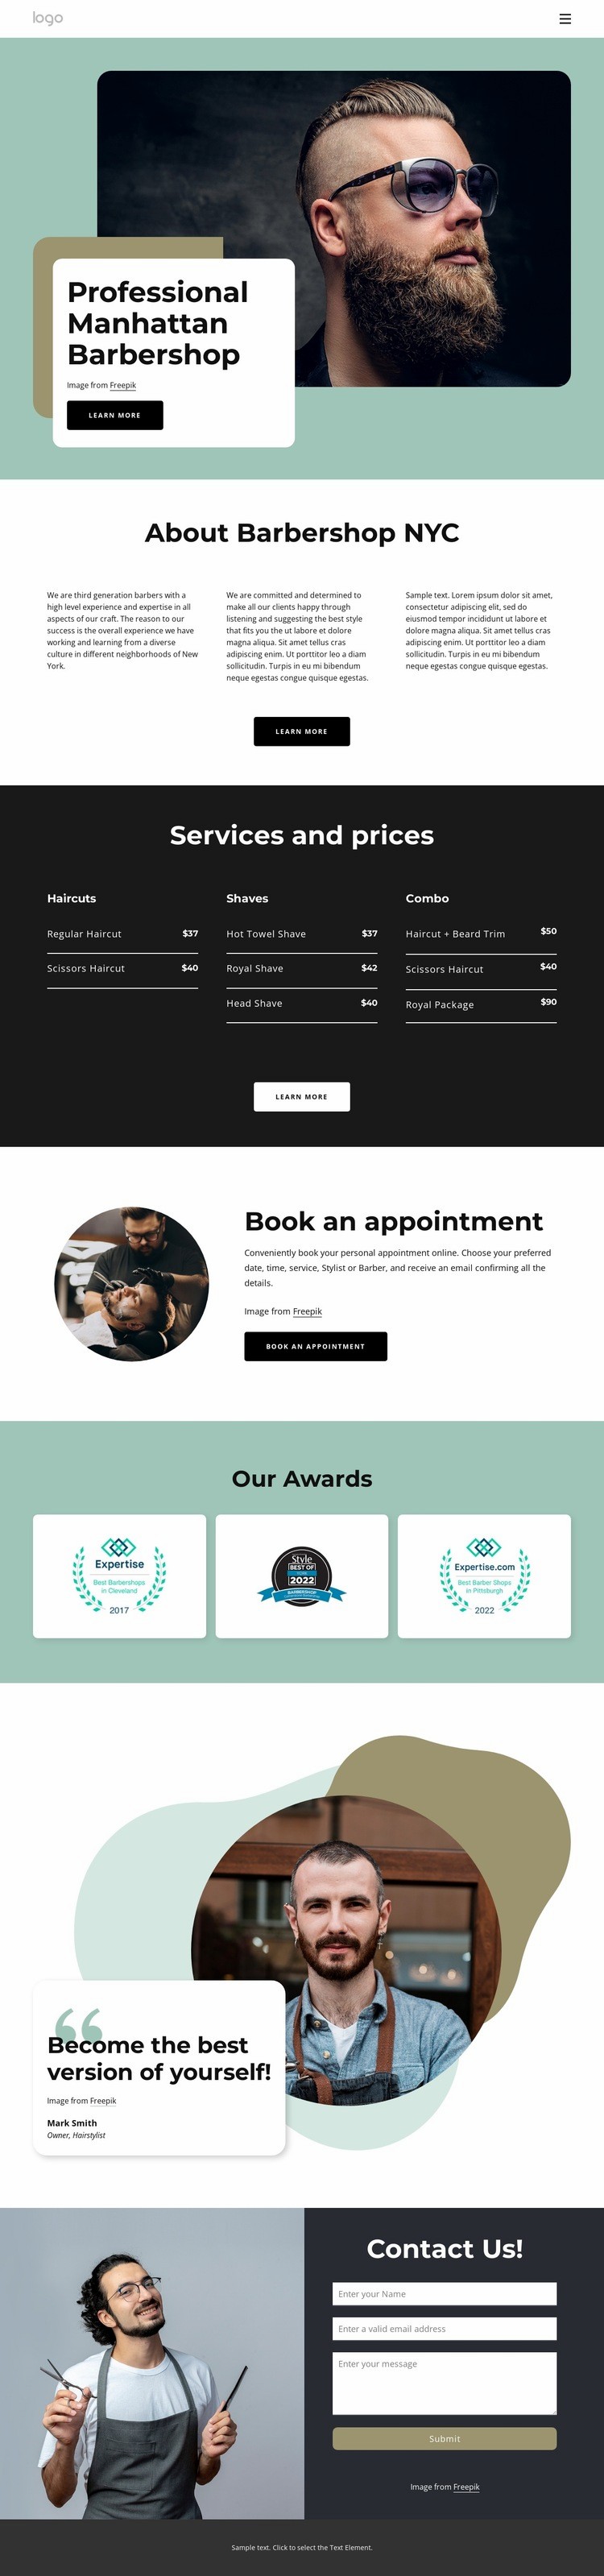 About Manhattan barbershop Homepage Design